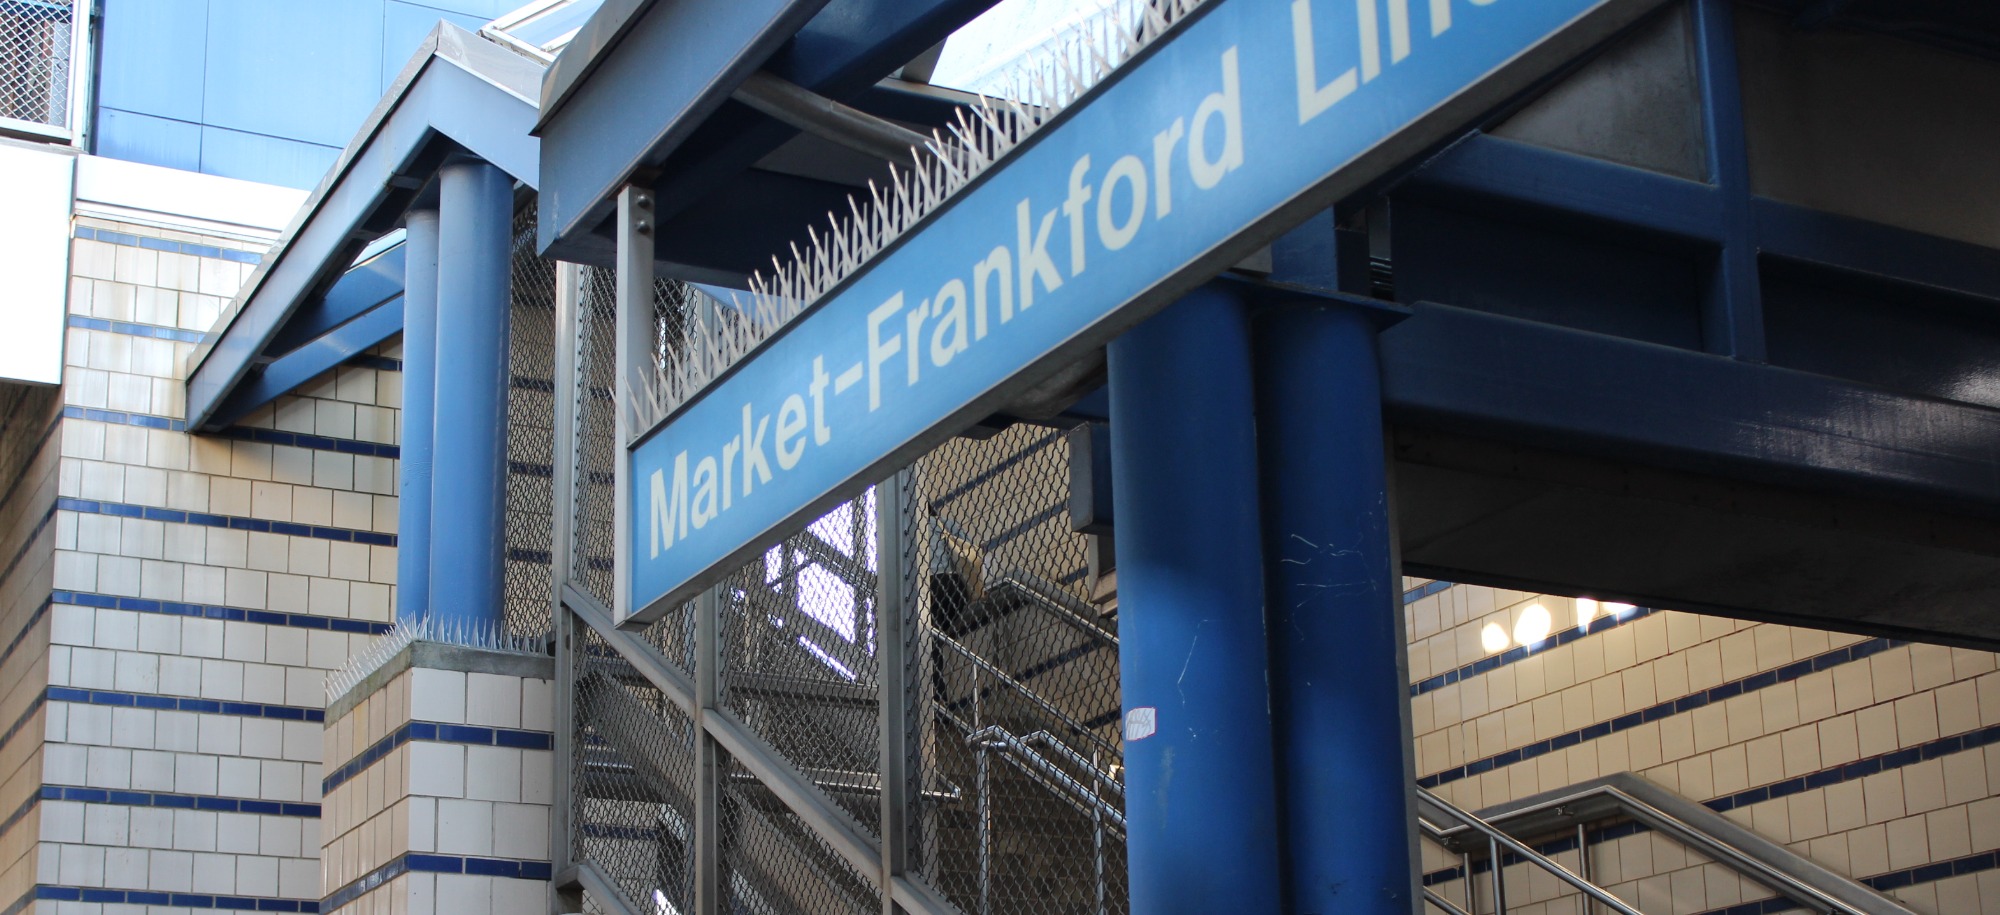 Frankford Station Fencing